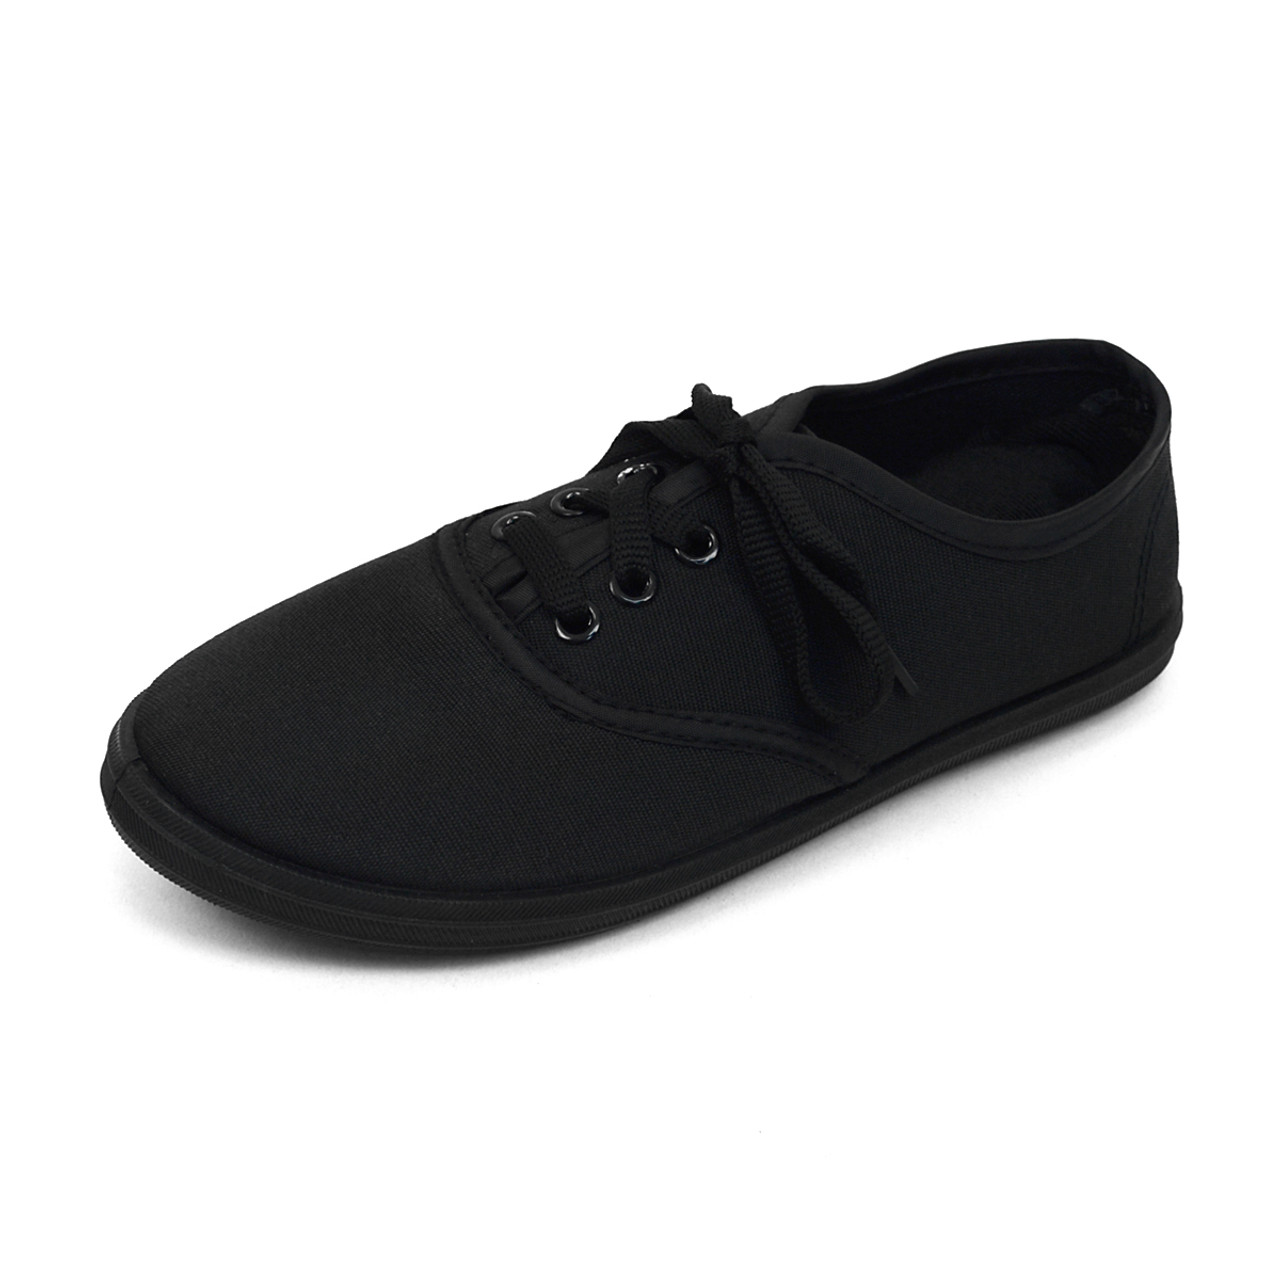 18pcs Women's Canvas Flat Black Casual Shoes Sneakers